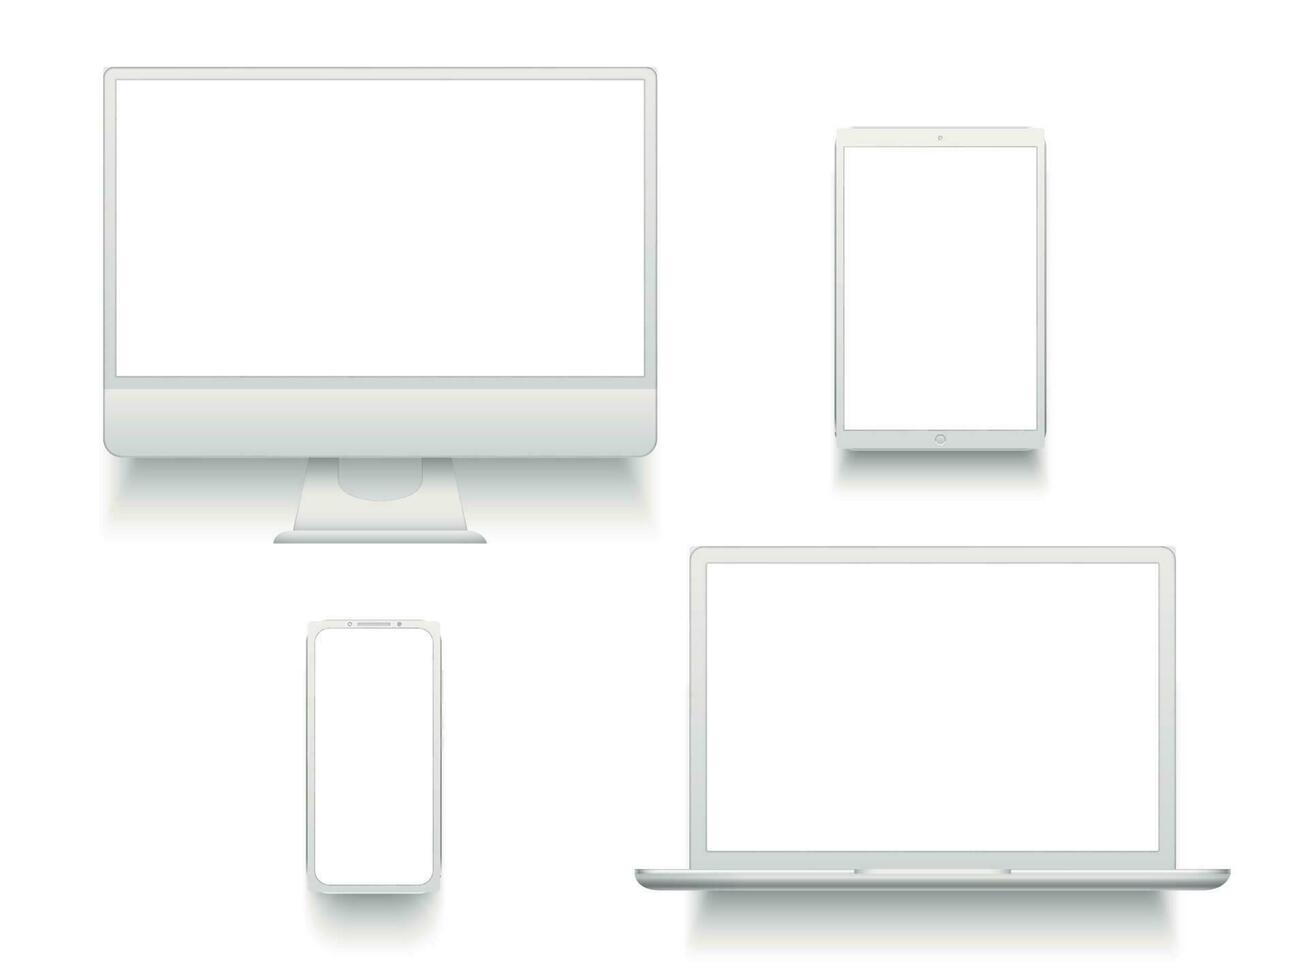 White desktop computer display screen smartphone tablet portable notebook or laptop. Mockup electronics devices vector set